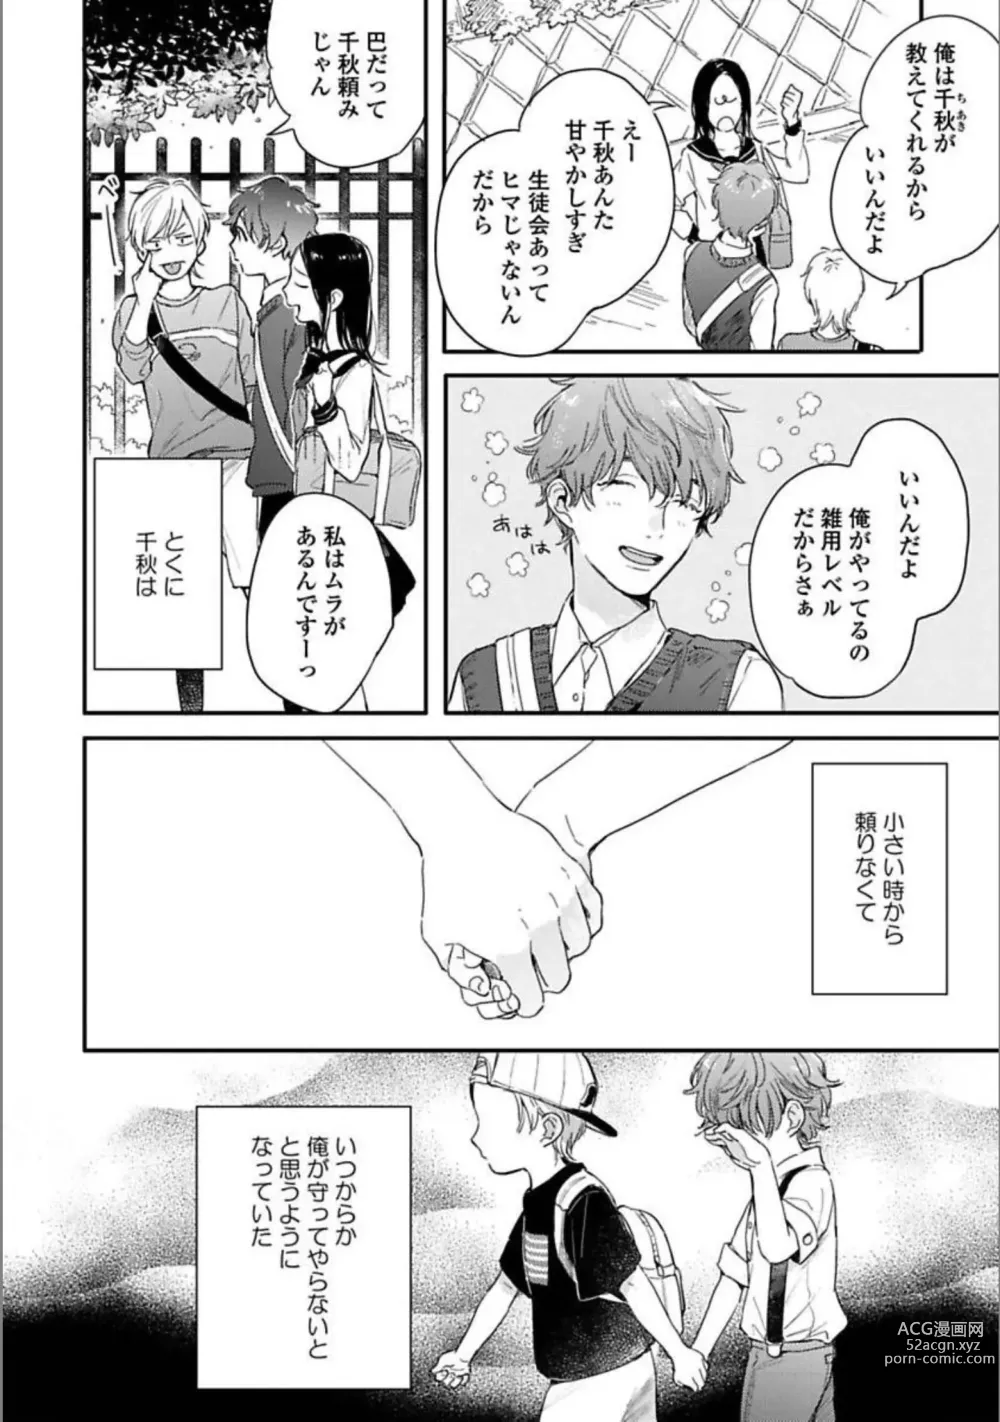 Page 14 of manga Itsuka Koi ni Naru Made Jou